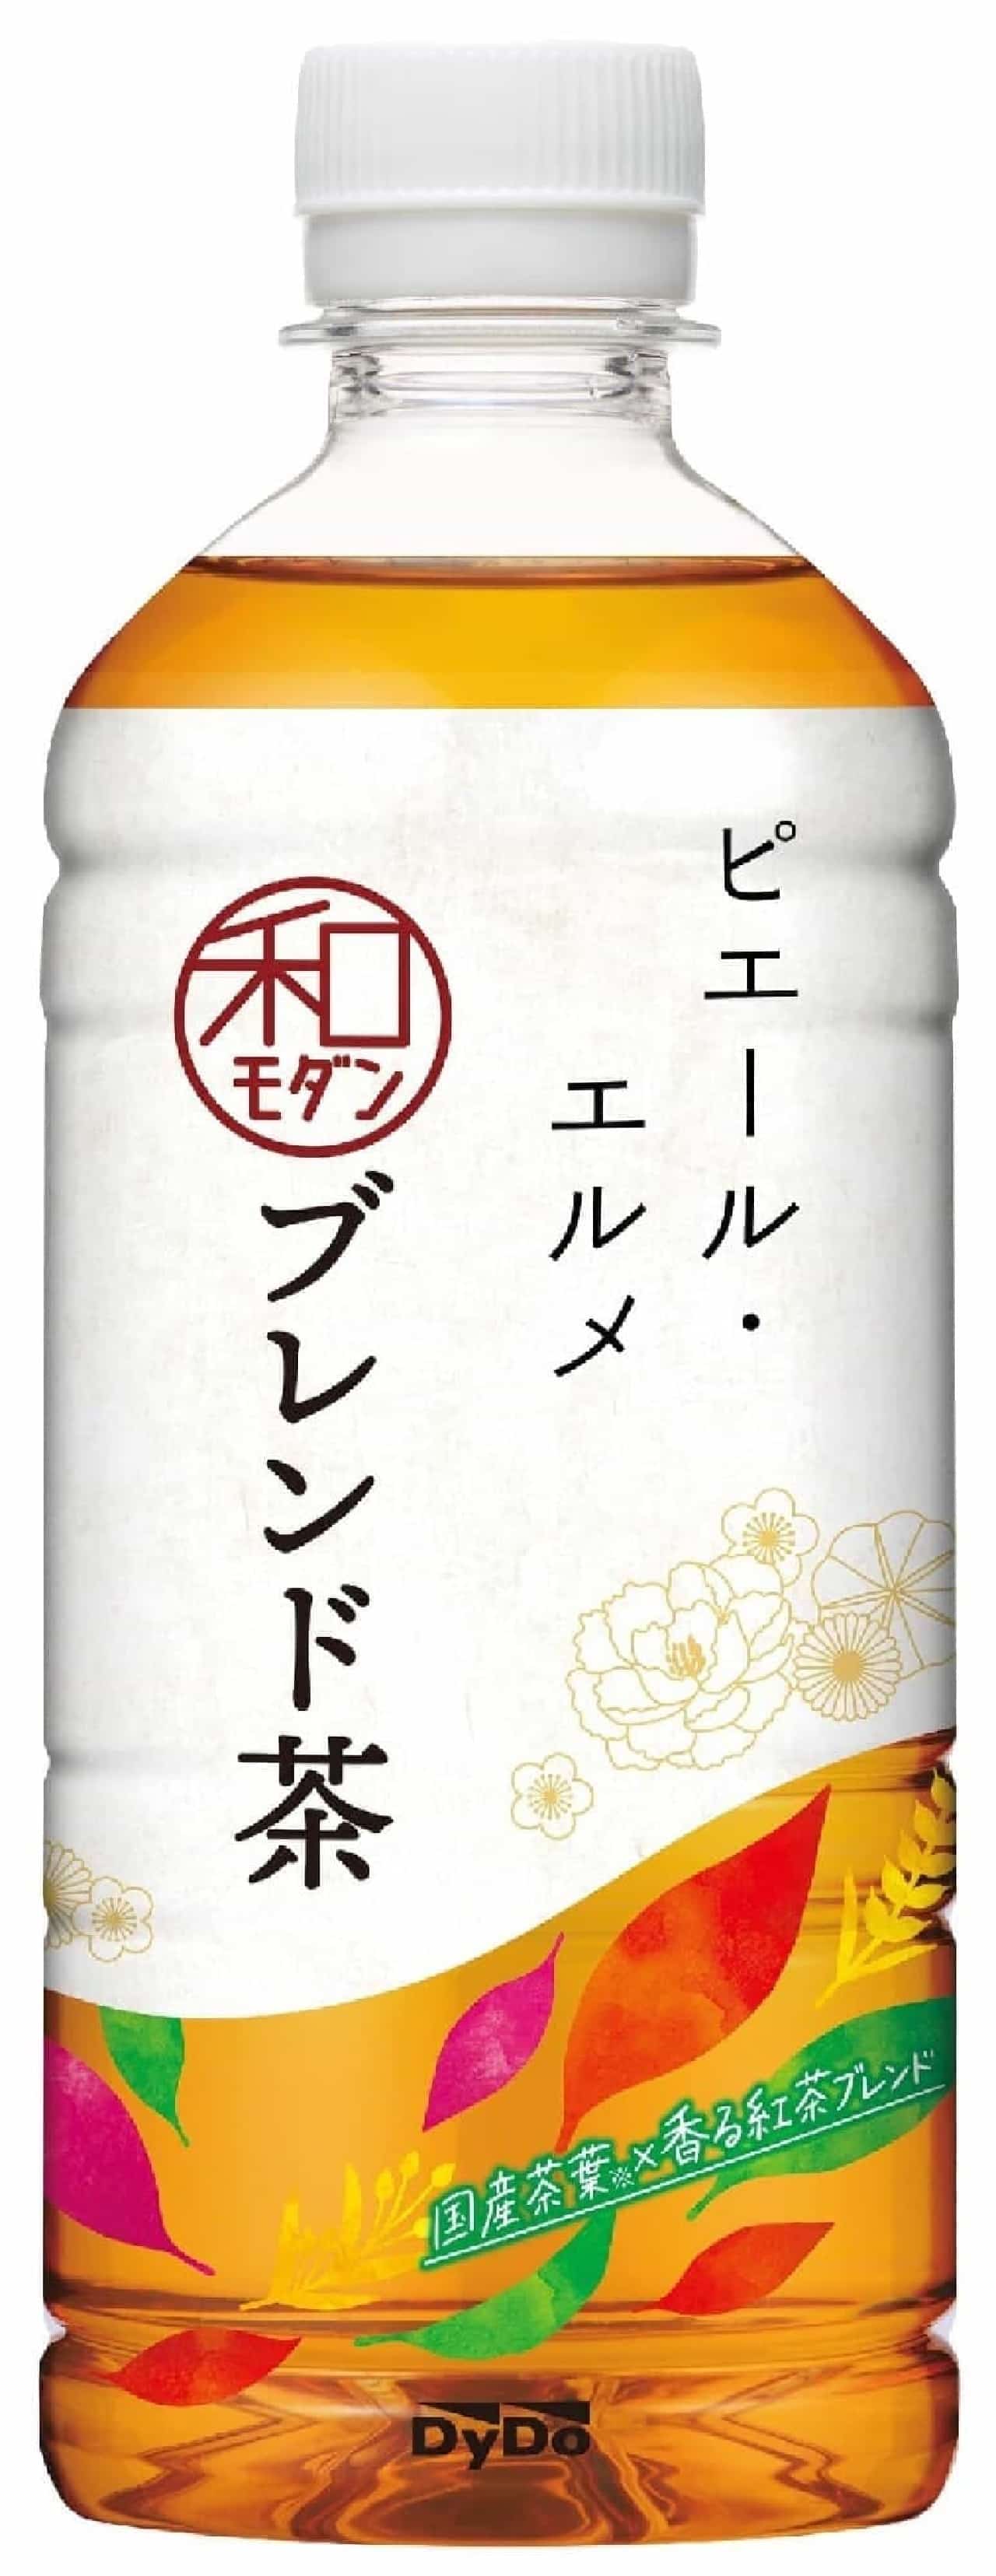 DAIDOH DRINKO "Japanese Modern Blend Tea under the supervision of Pierre Hermé